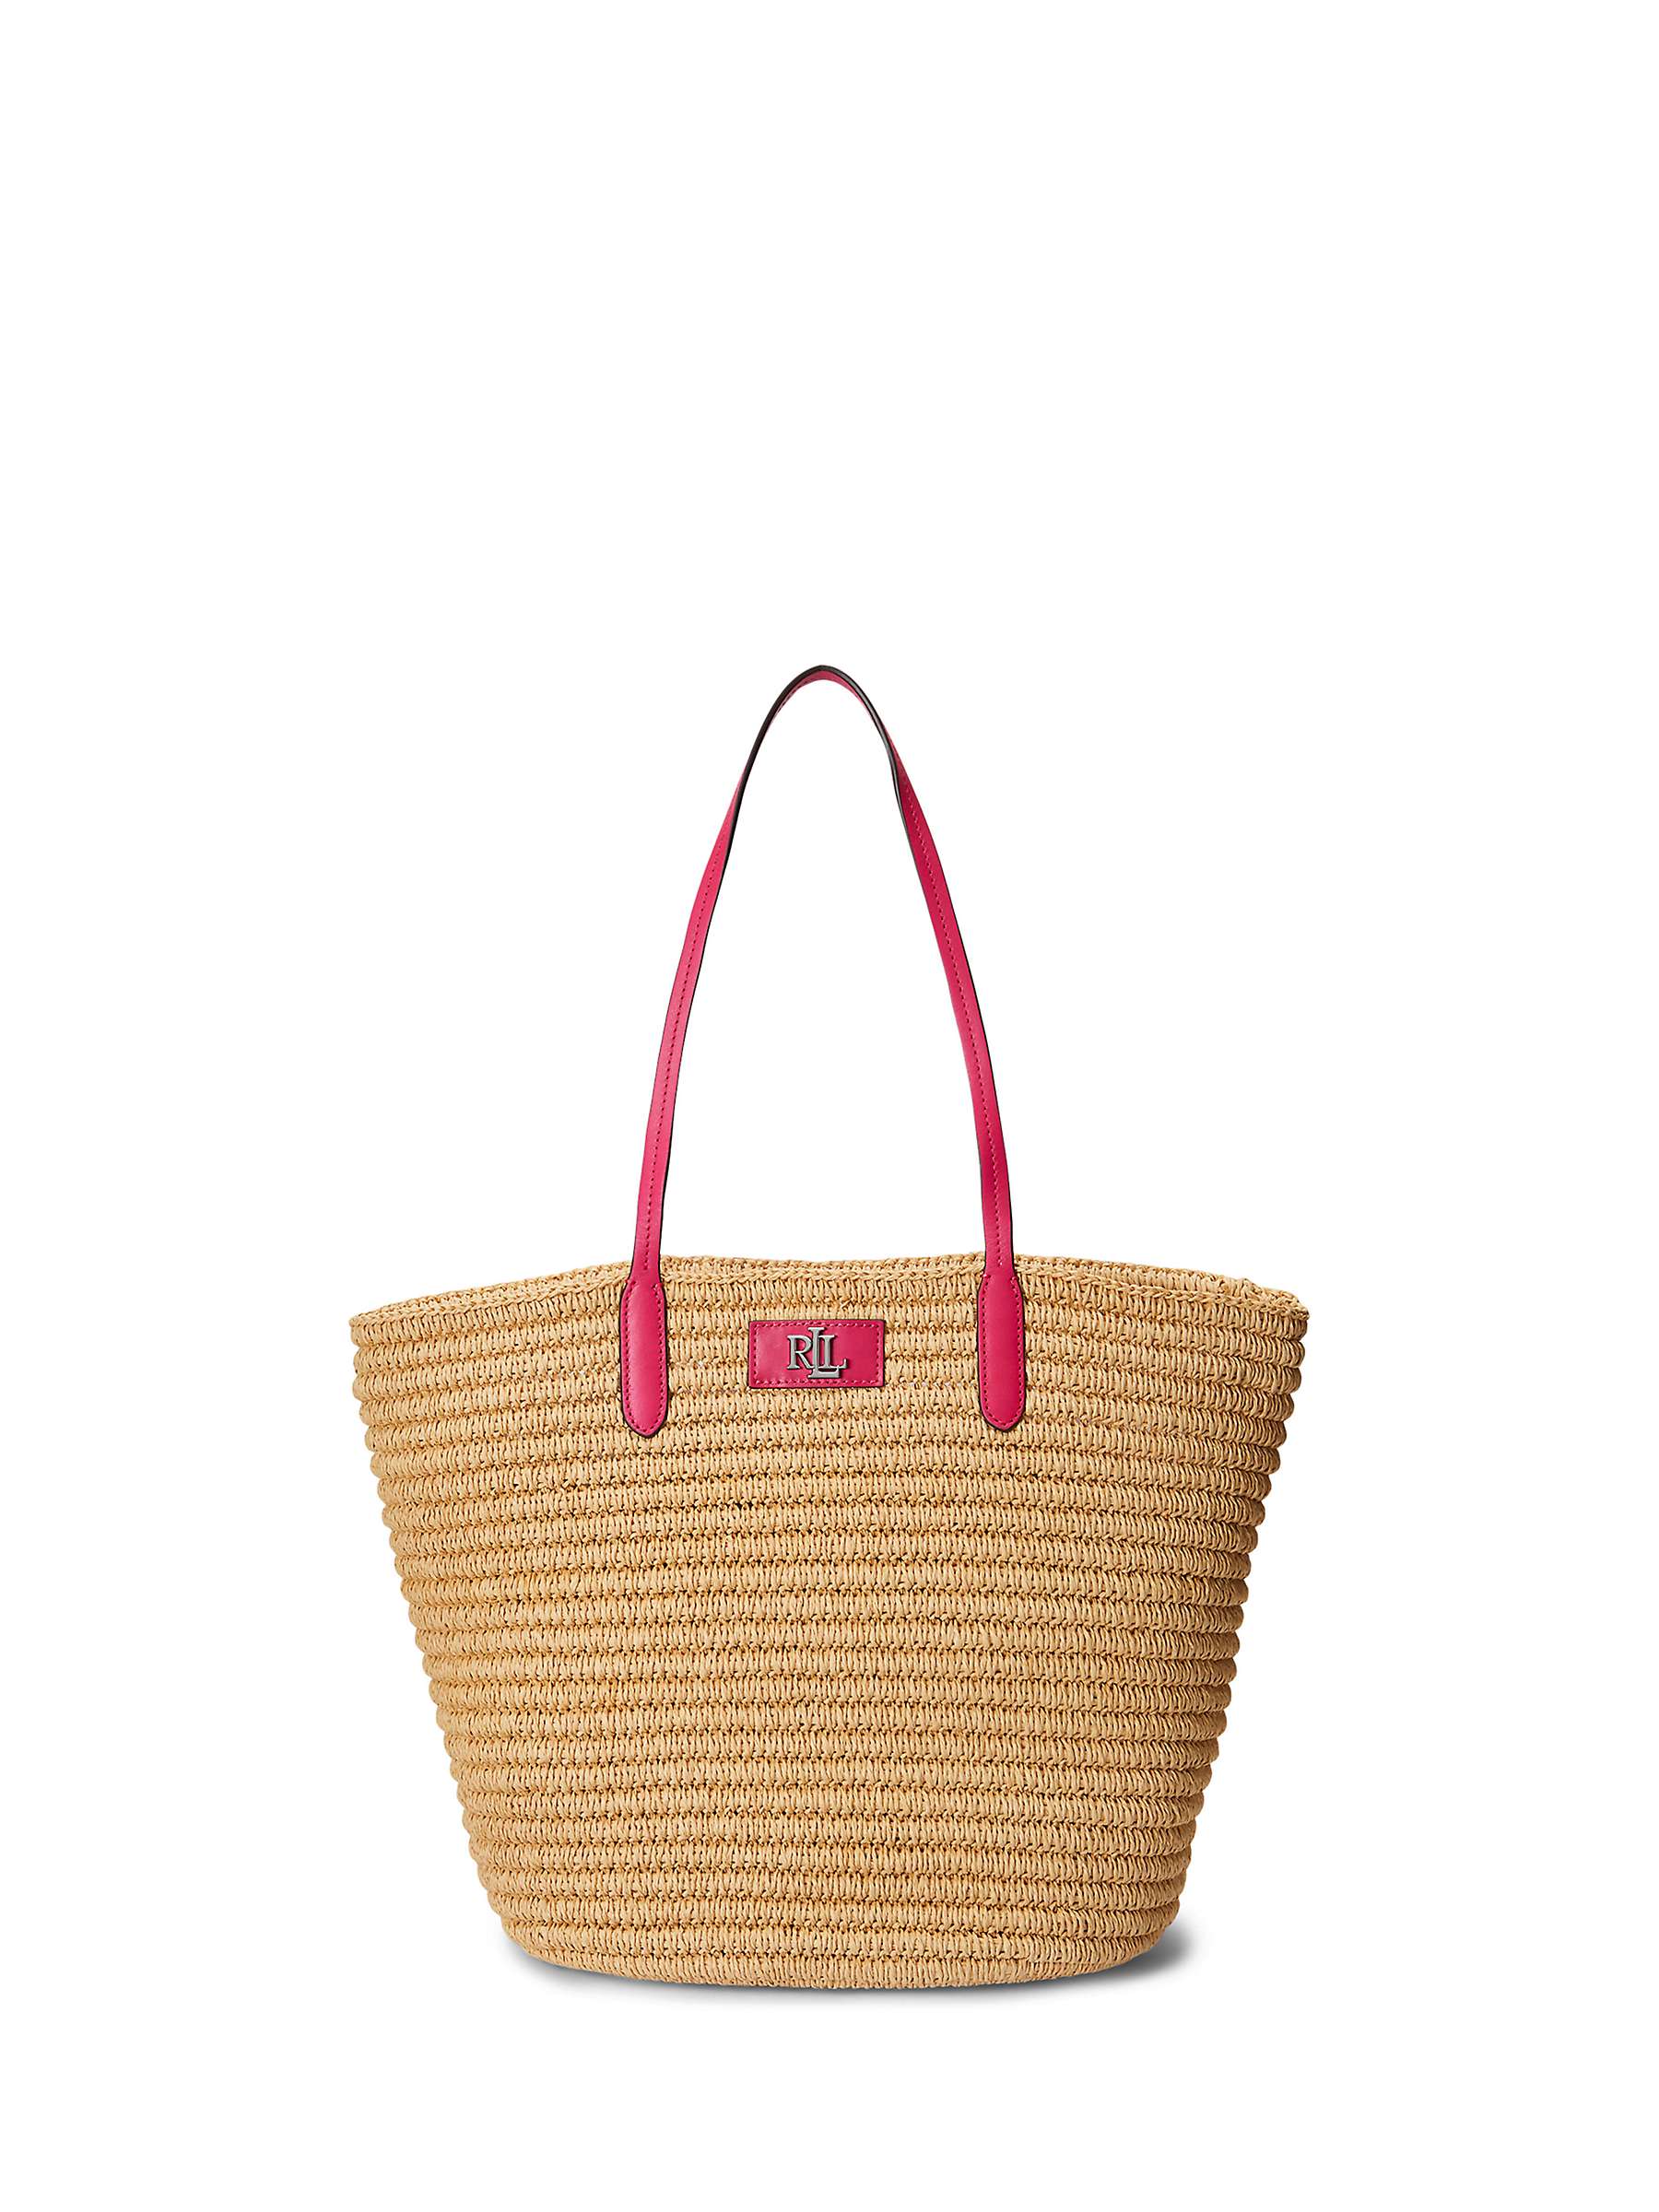 Buy Lauren Ralph Lauren Brie Straw Tote Bag with Pouch Online at johnlewis.com